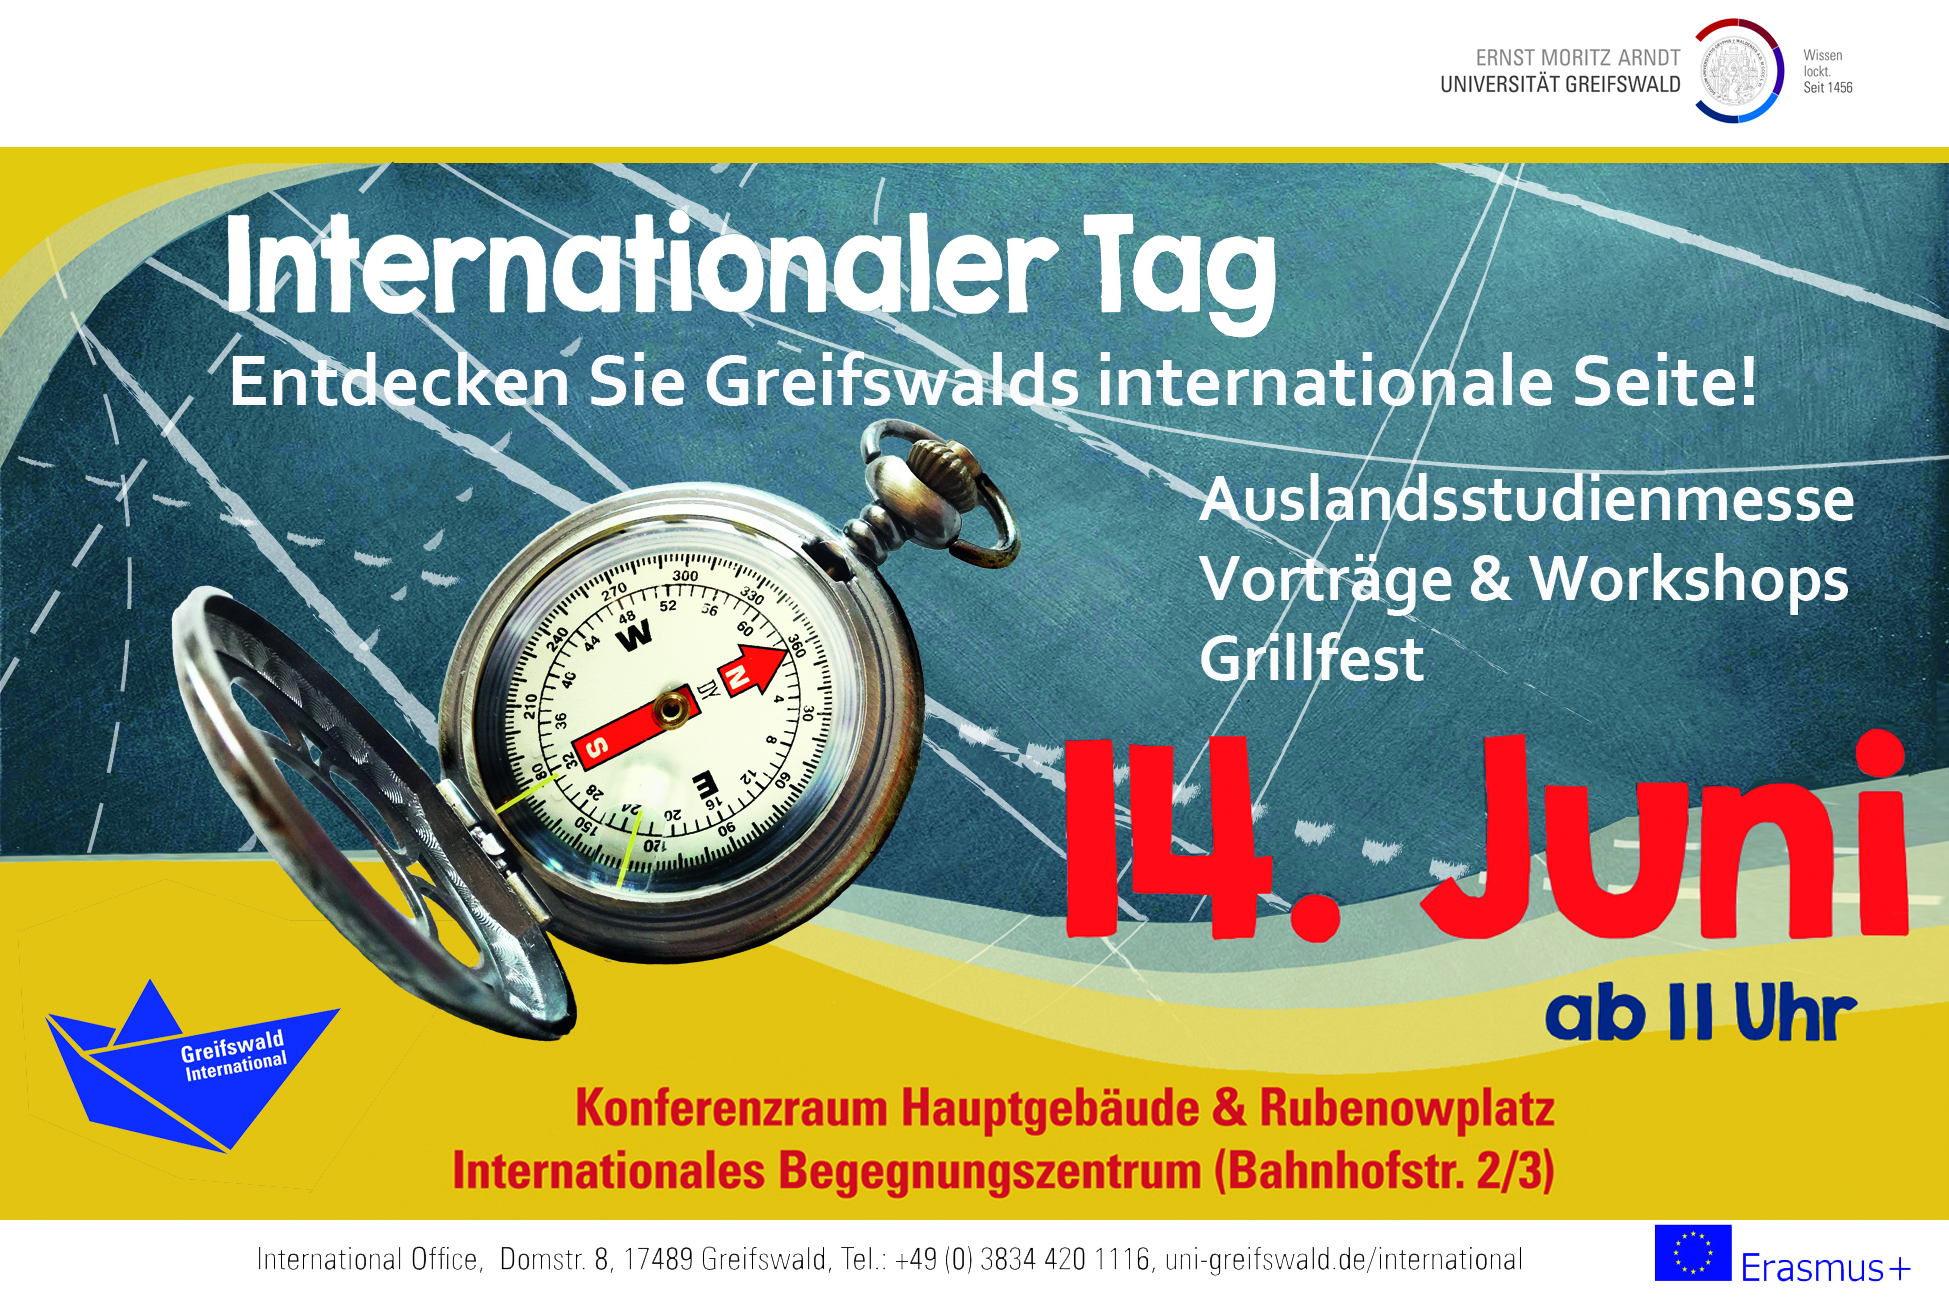 International Day 2017 at the University of Greifswald